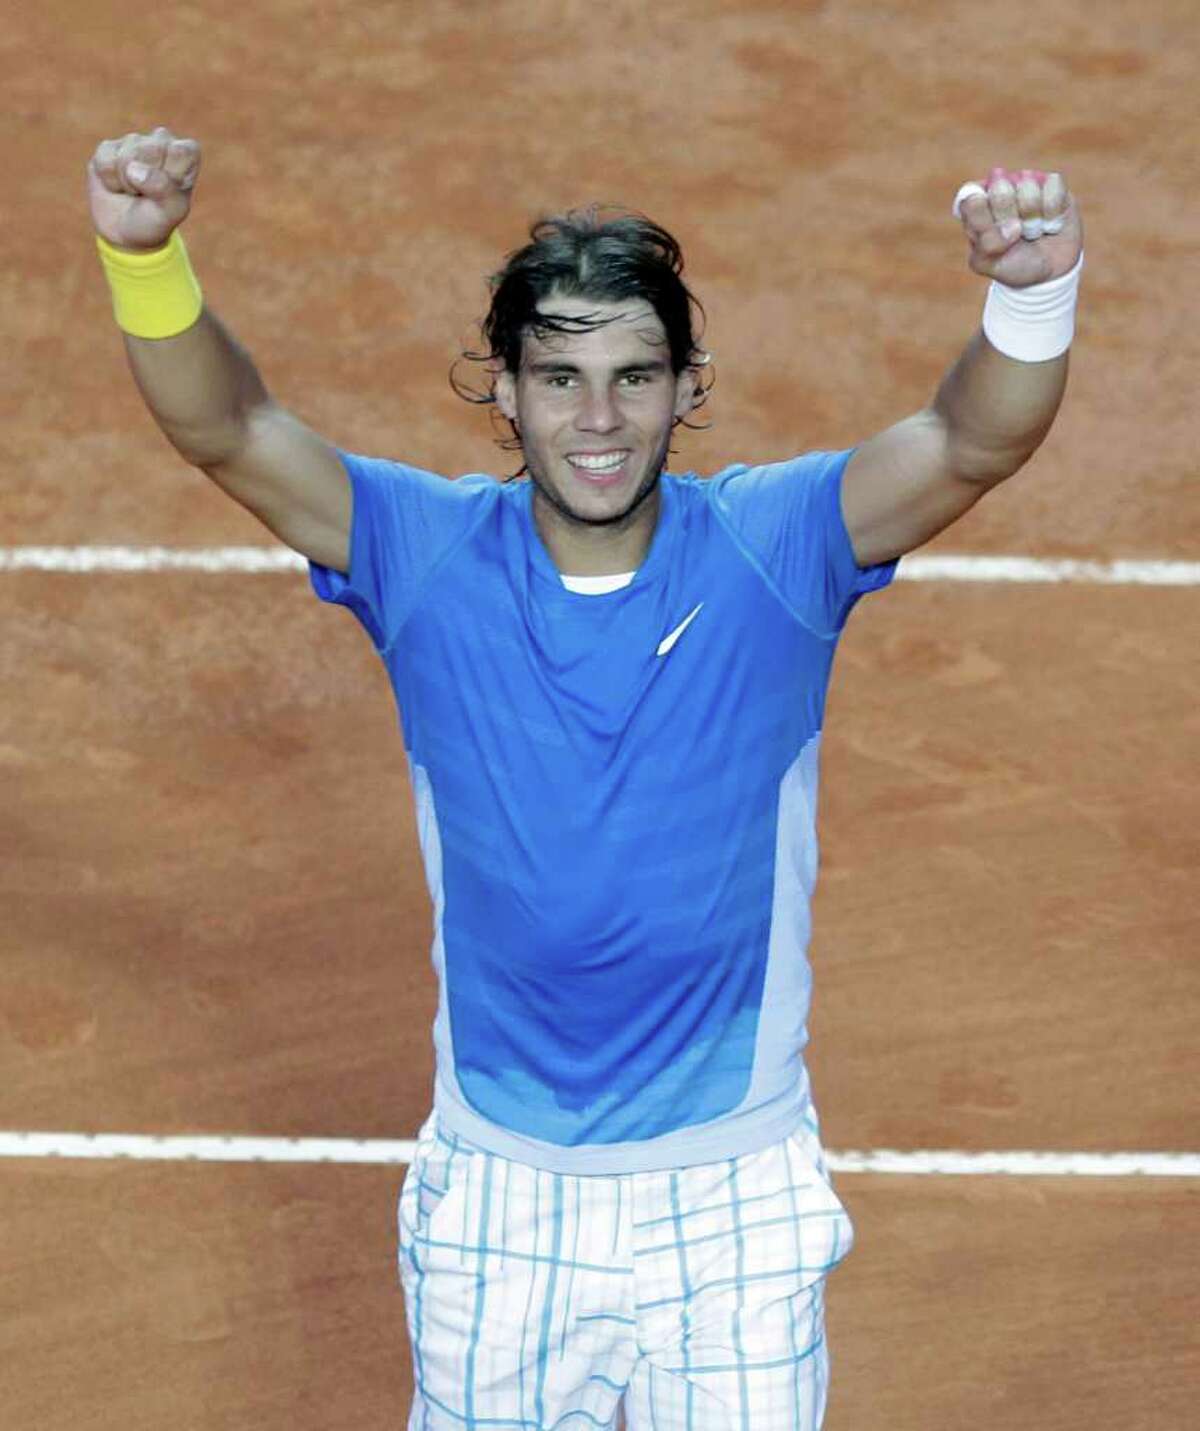 Rafael Nadal of Spain celebrates after beating Stanislas Wawrinka of Switzerland at the Rome Masters tennis tournament, in Rome, Friday, April 30, 2010. Nadal beat Wawrinca 6-4, 6-1. (AP Photo/Alessandra Tarantino)